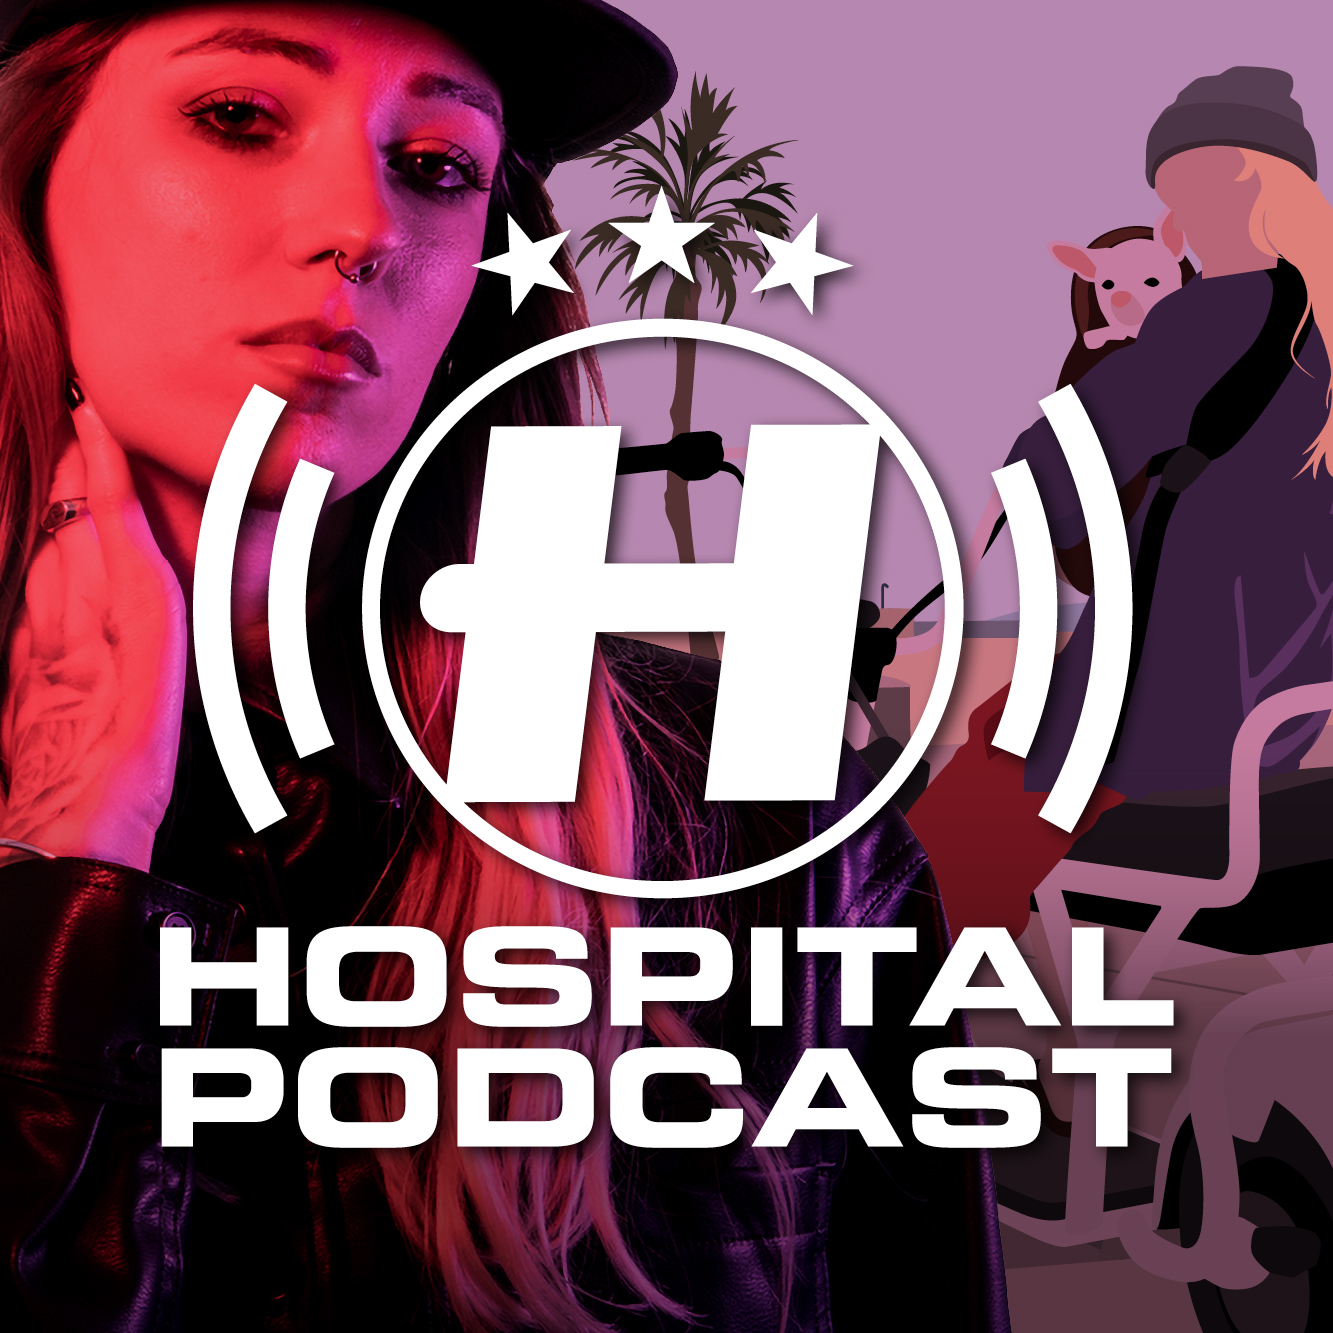 Hospital Podcast 451 with Flava D Artwork